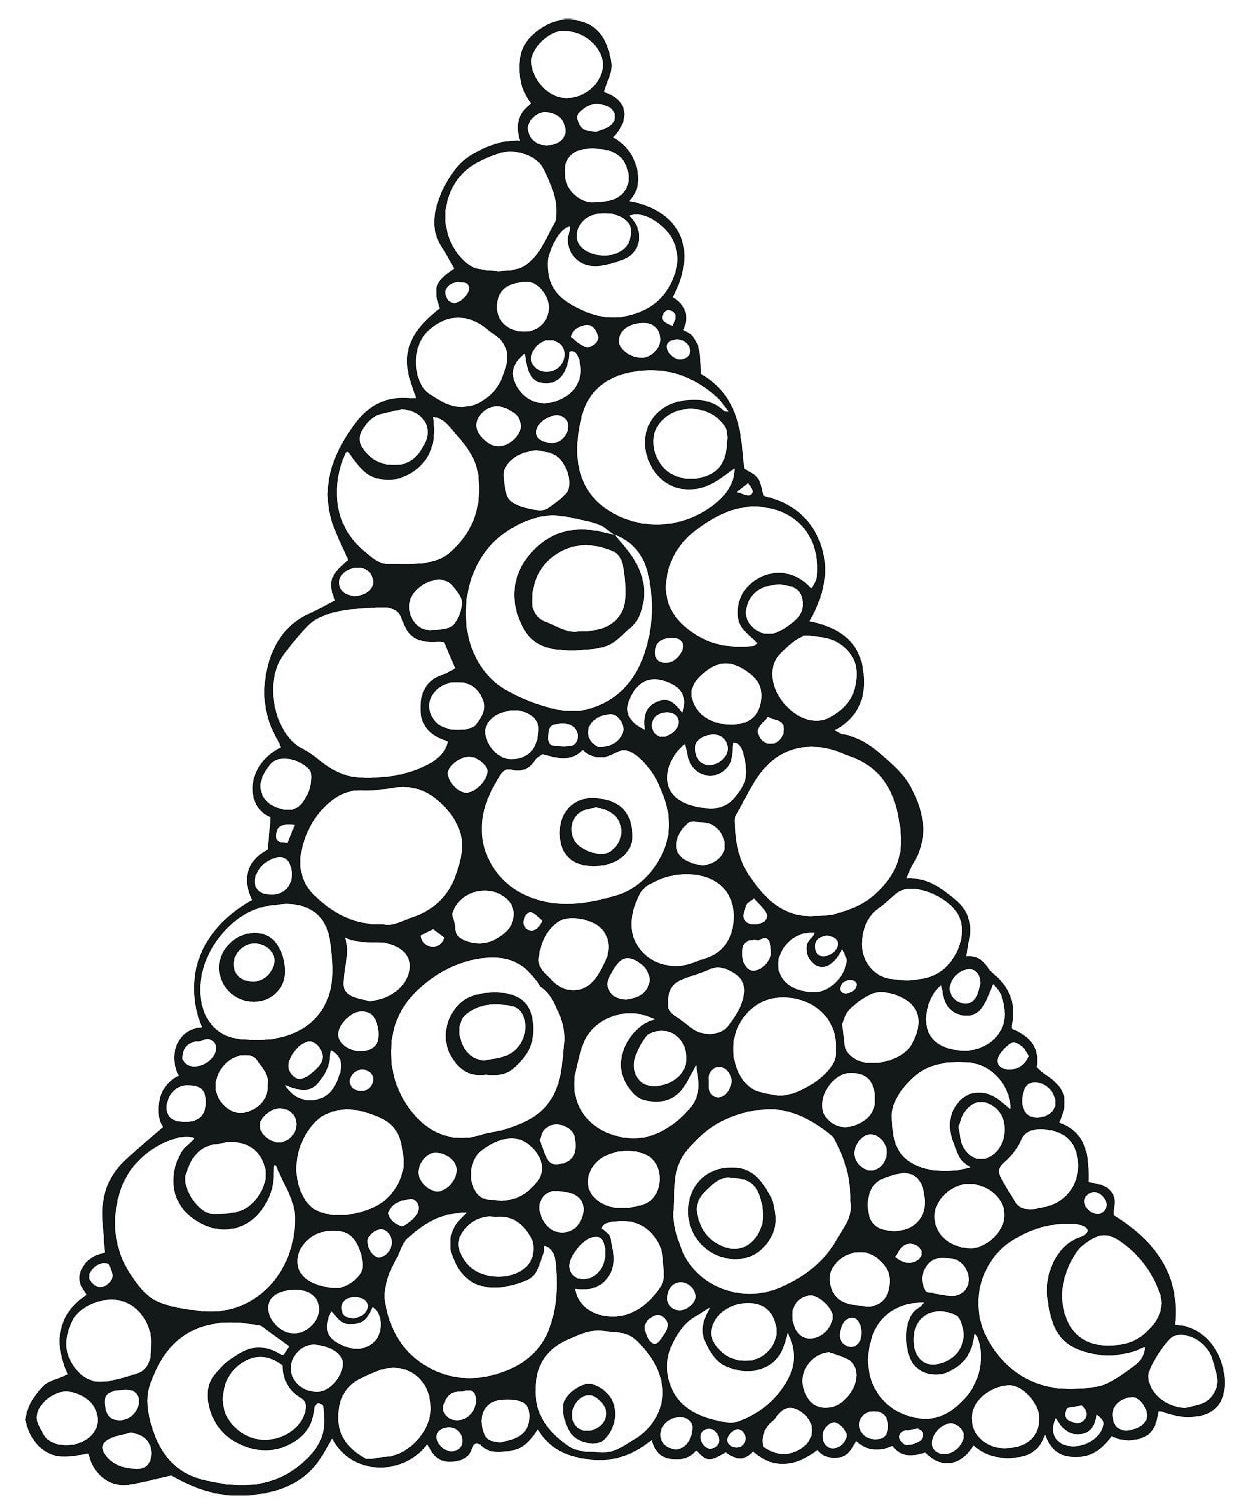 Printable Christmas Tree Made Of Circles Coloring Page